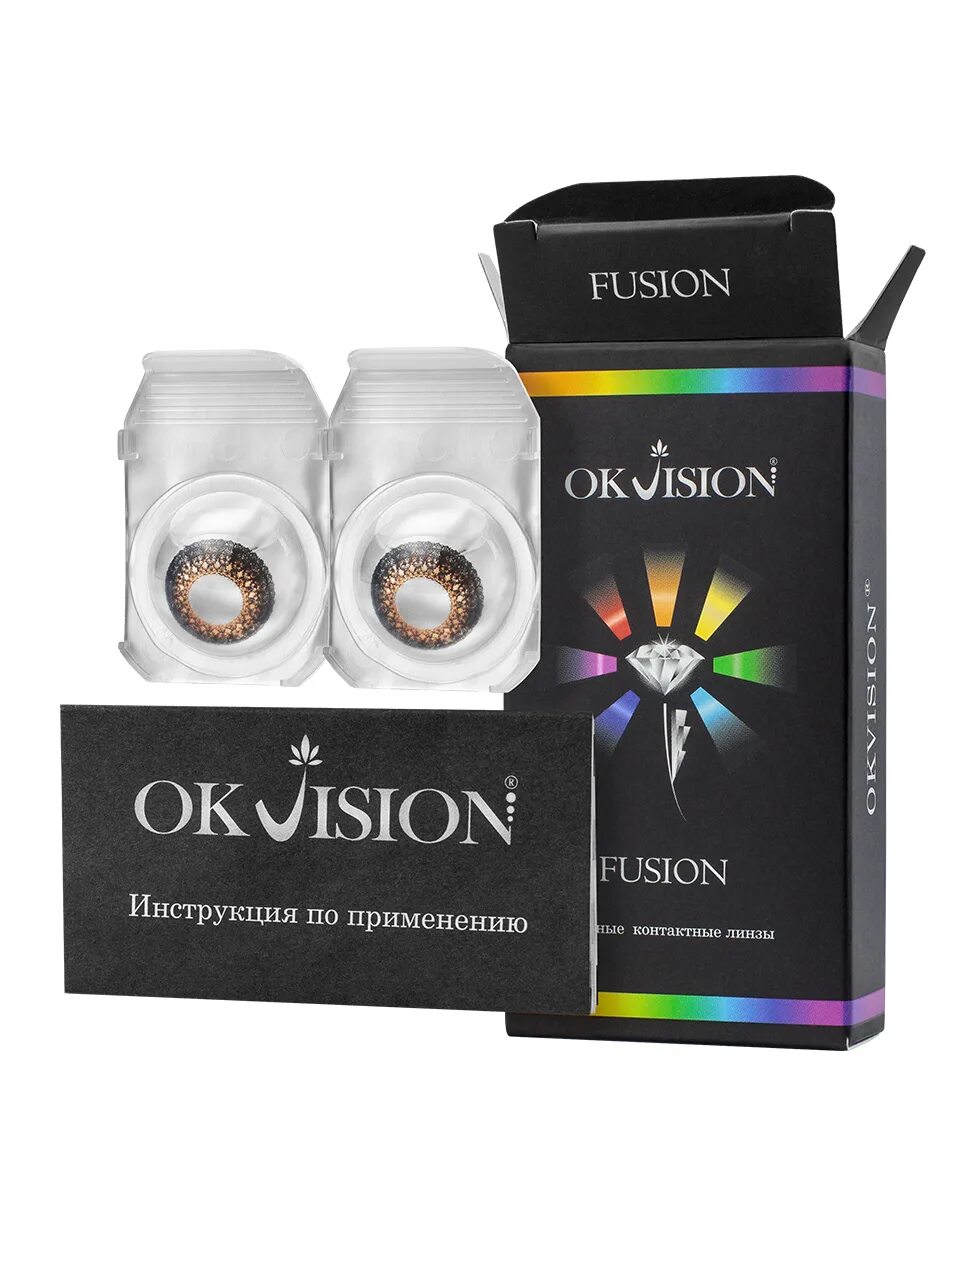 Fusion brown. Линзы OKVISION Fusion Grey. OKVISION Fusion (2 линзы). Линзы OKVISION Fusion Green 2. Капли OKVISION Aqua (18 мл).